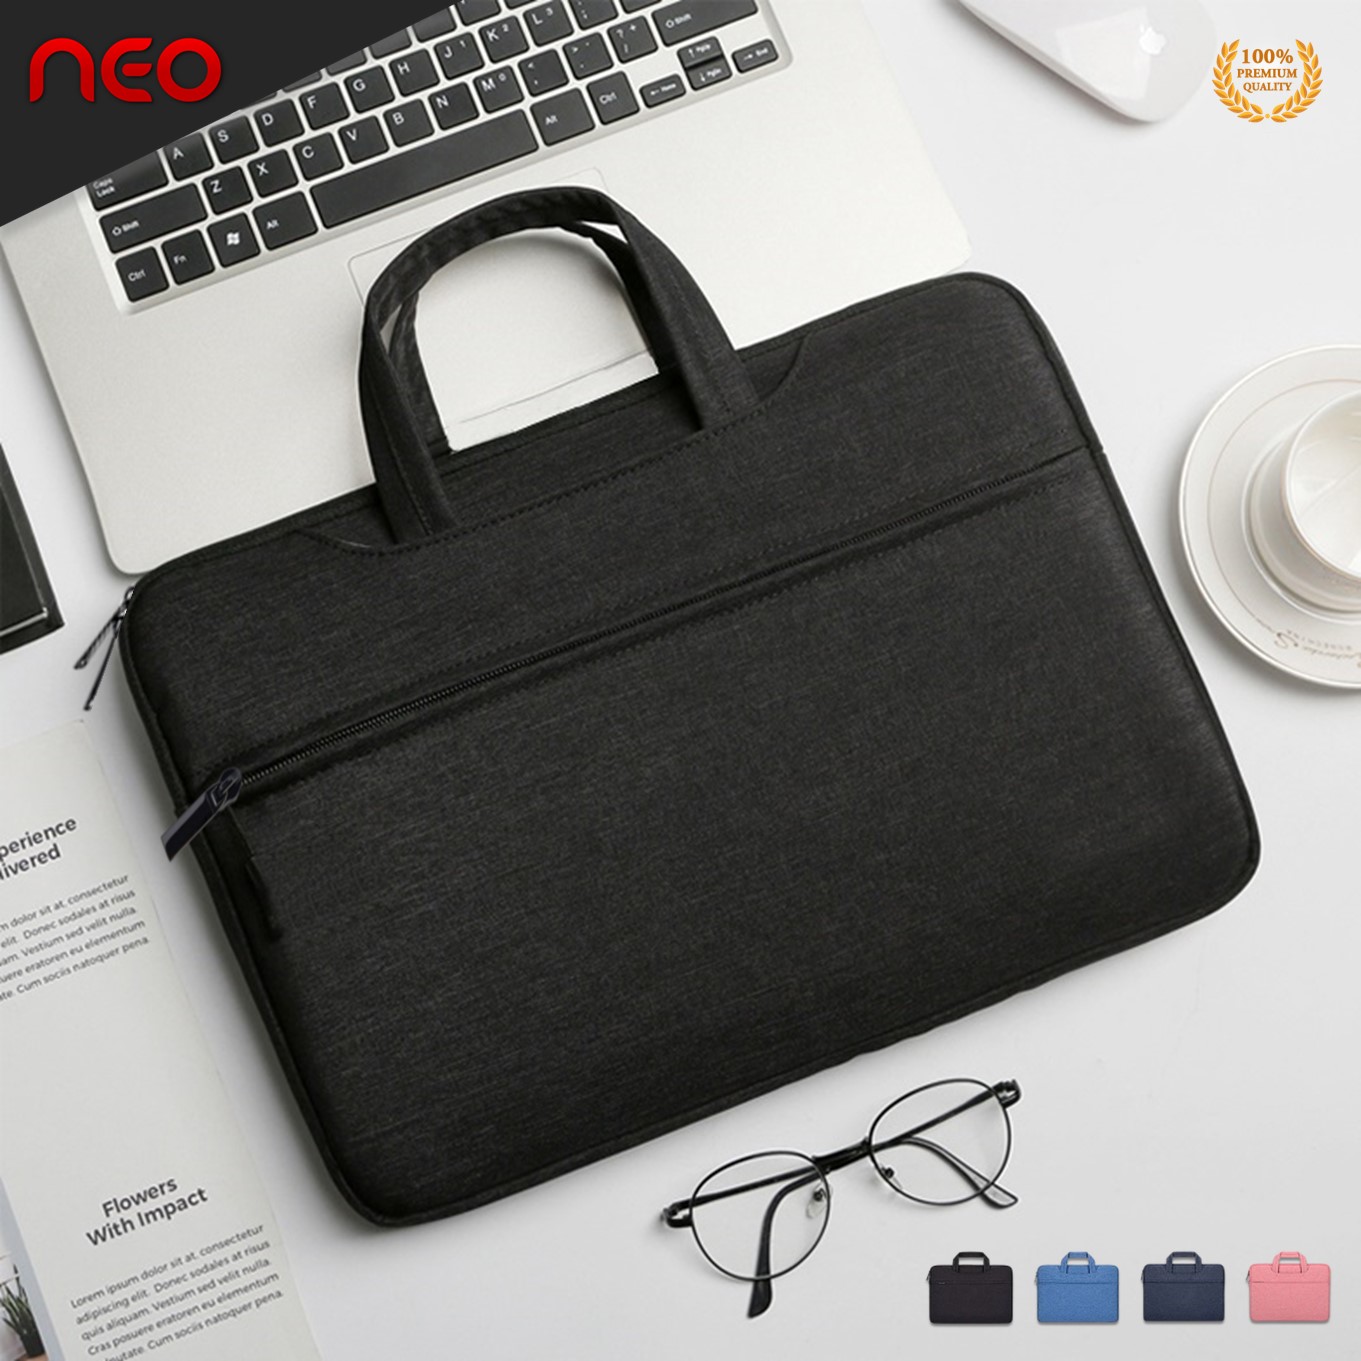 NEO กระเป๋าMacbook Air Pro กระเป๋าแล็ปท็อป 13.3, 14, 15, 15.6นิ้ว Soft Case กันน้ำ กันรอย กันกระแทก ซองใส่โน๊ตบุ๊ค แล็ปท็อป Surface Laptop Bag Macbook Case 13.3